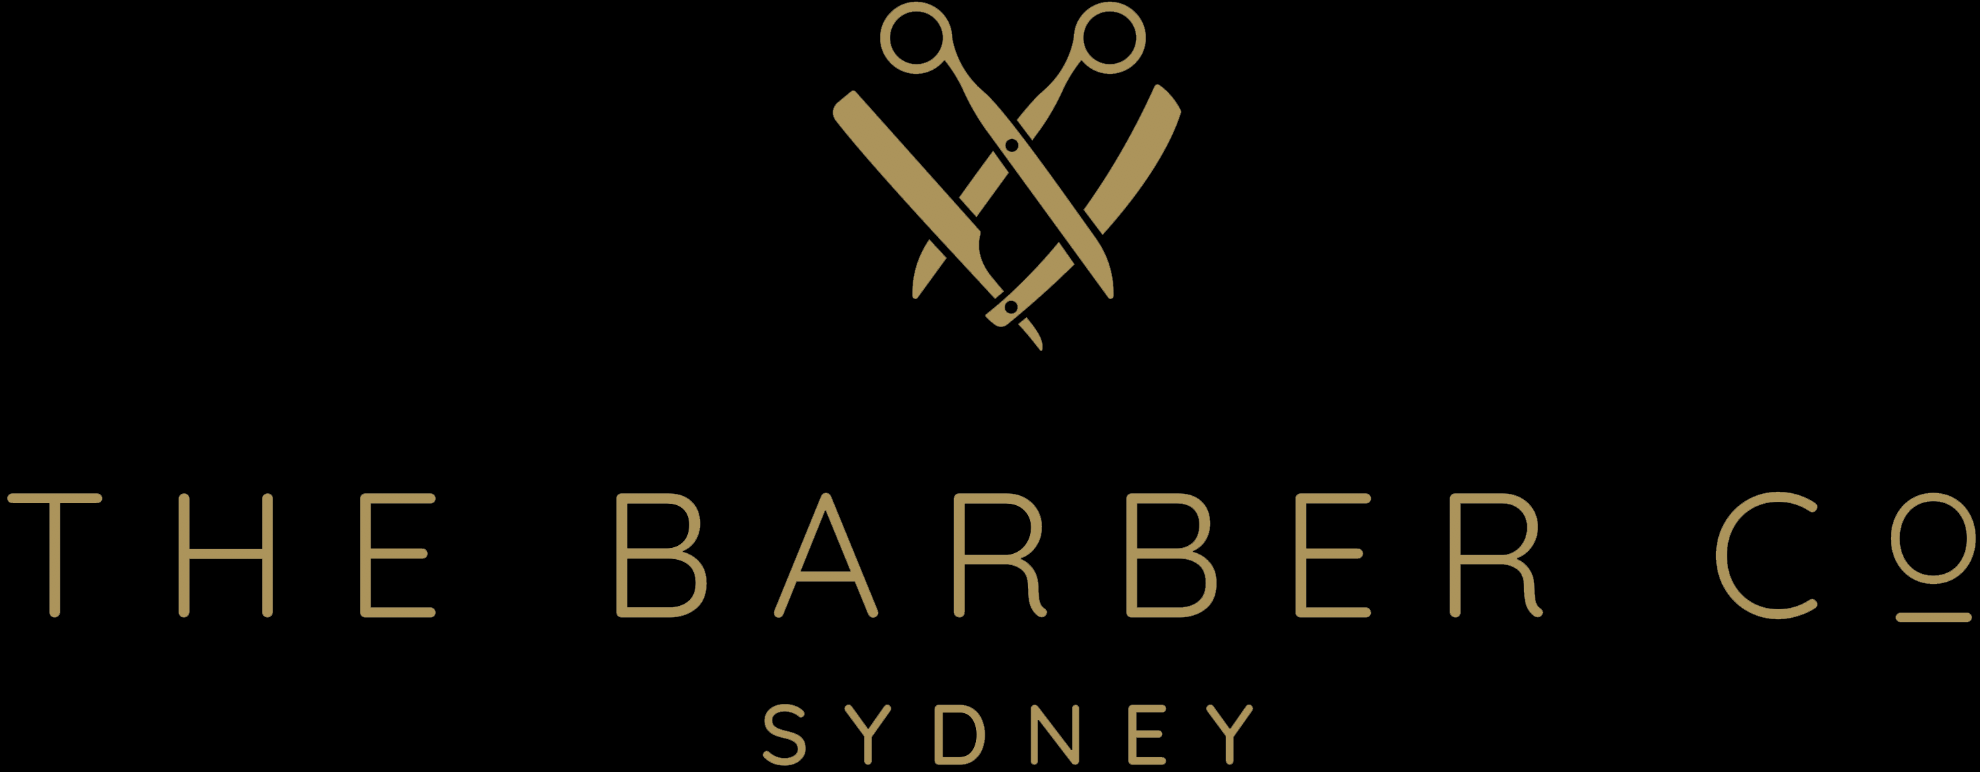 The Barber Co. Sydney